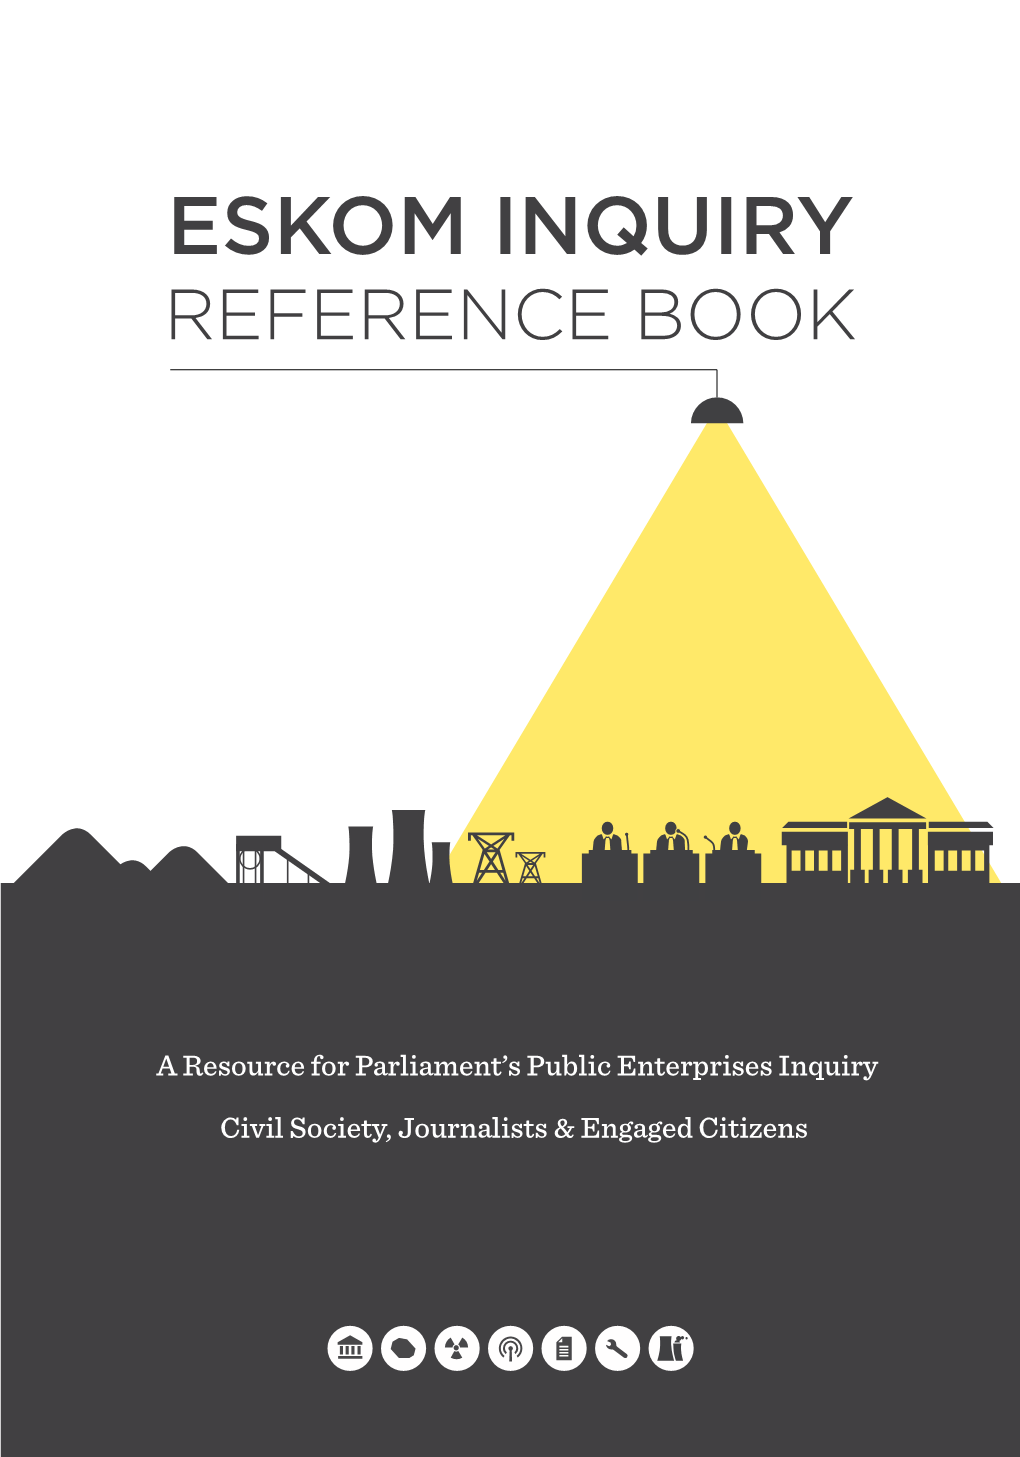 Eskom Inquiry Reference Book